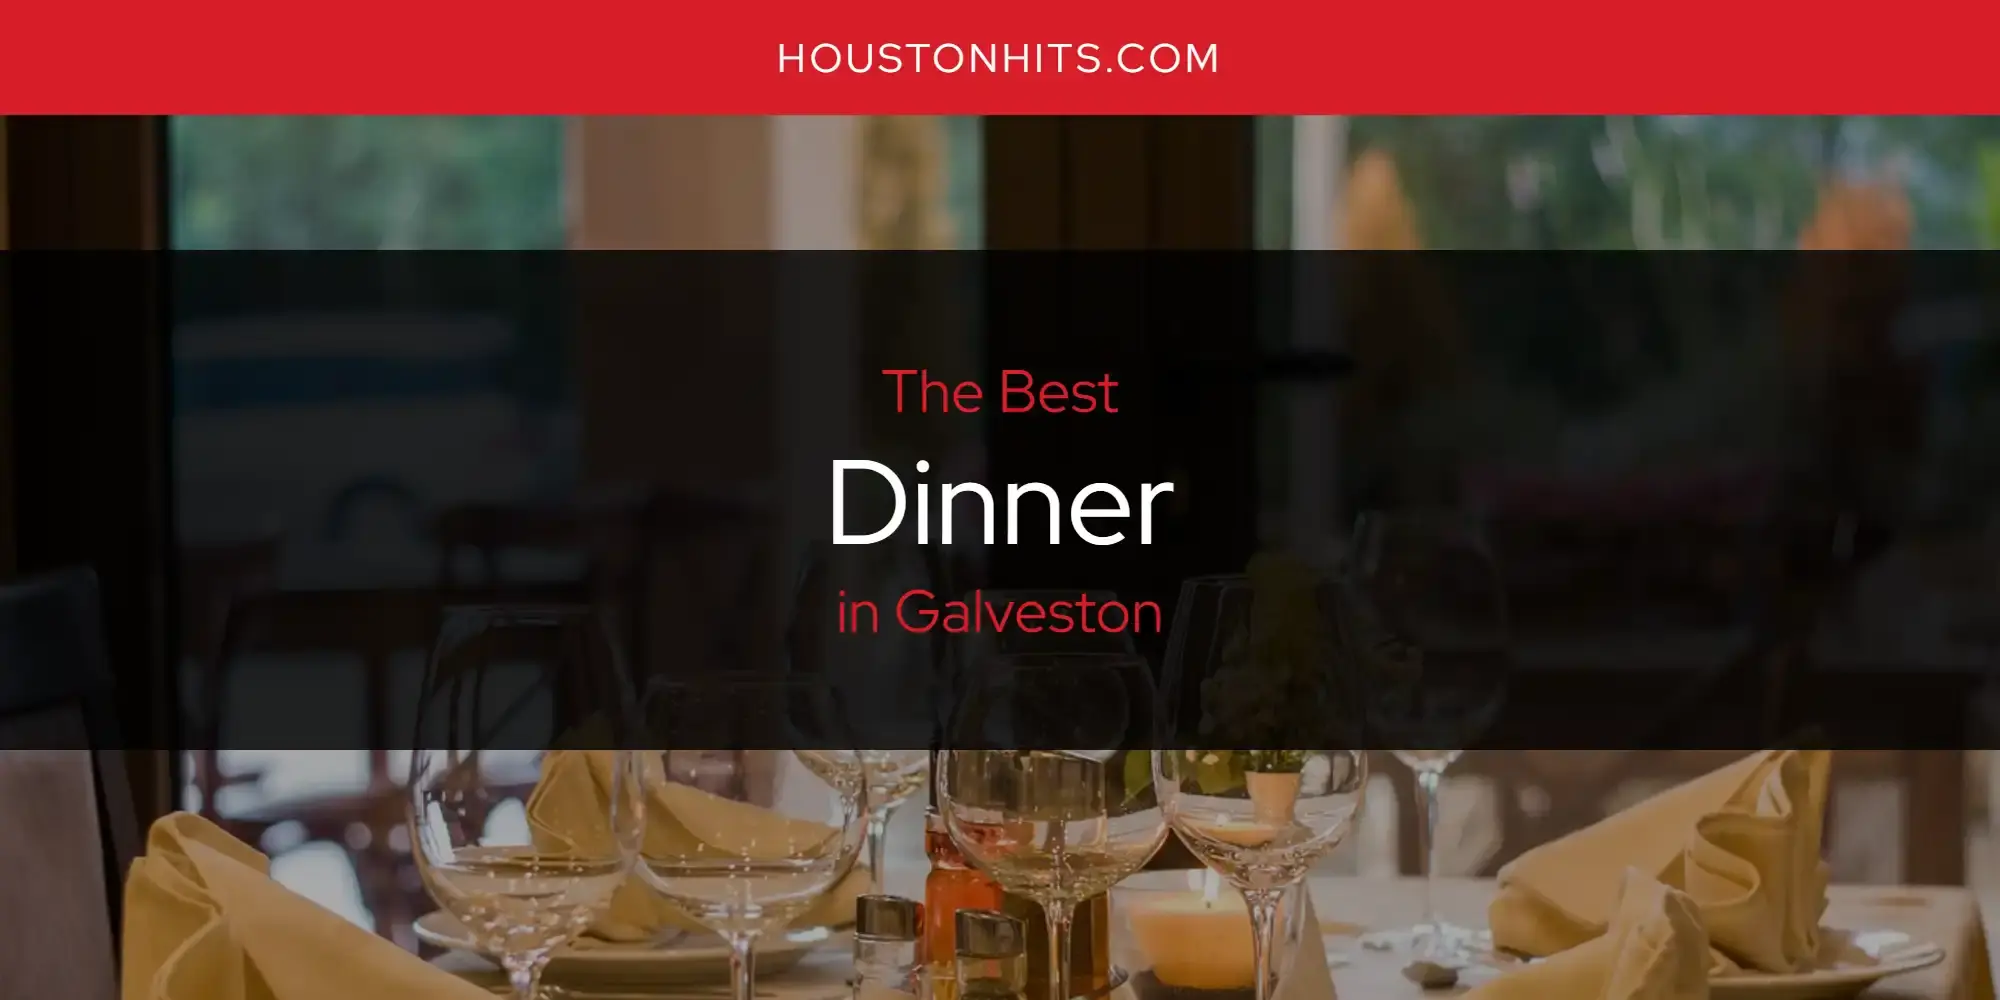 Best Dinner in Galveston? Here's the Top 17